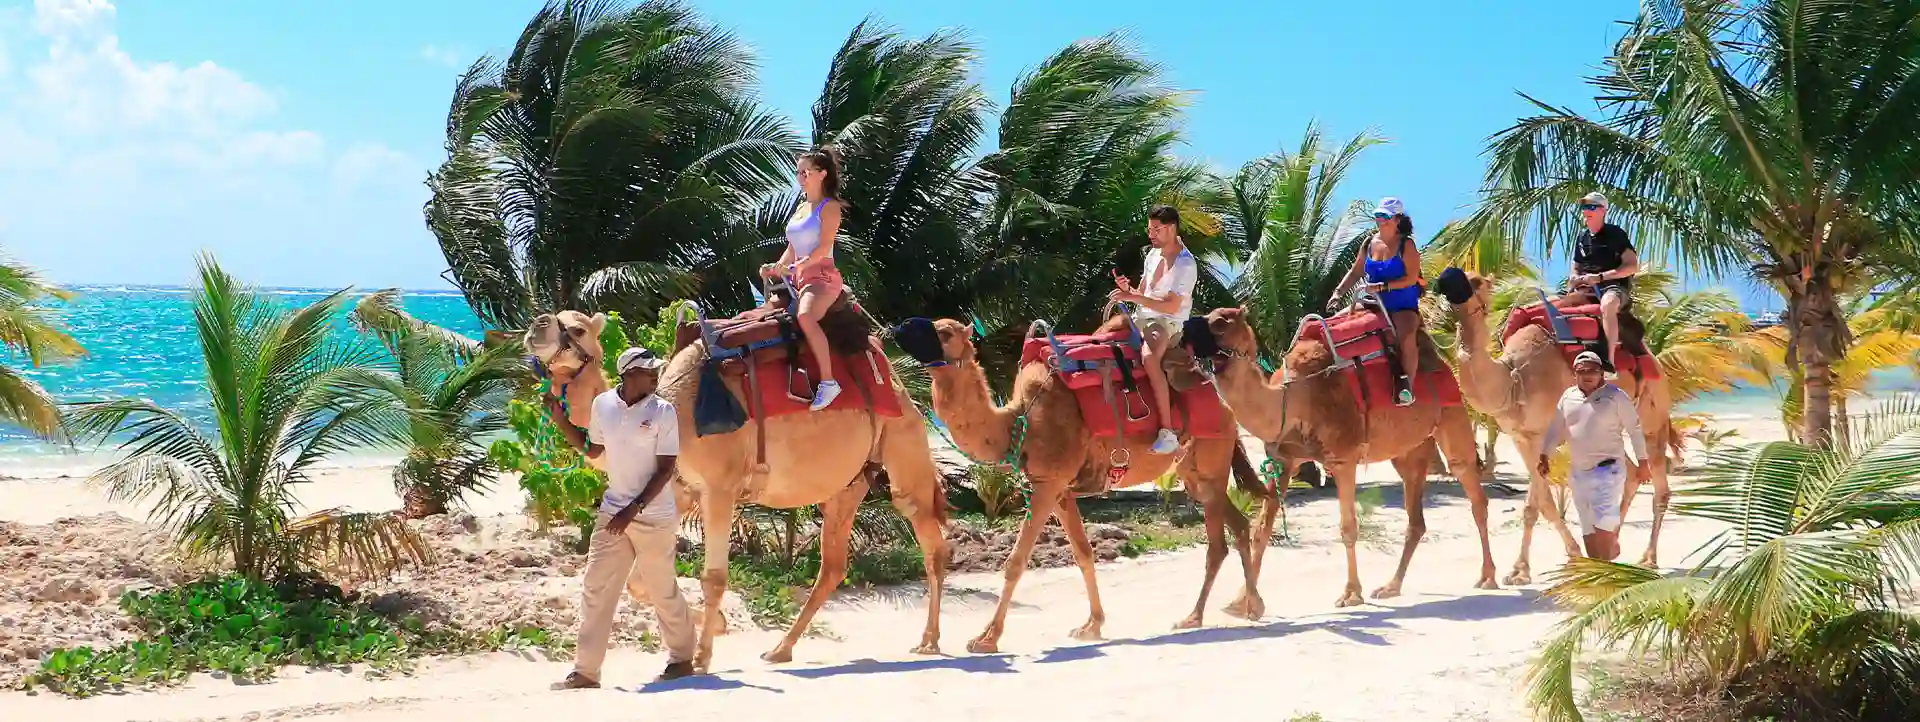 camel caravan maroma cancun red